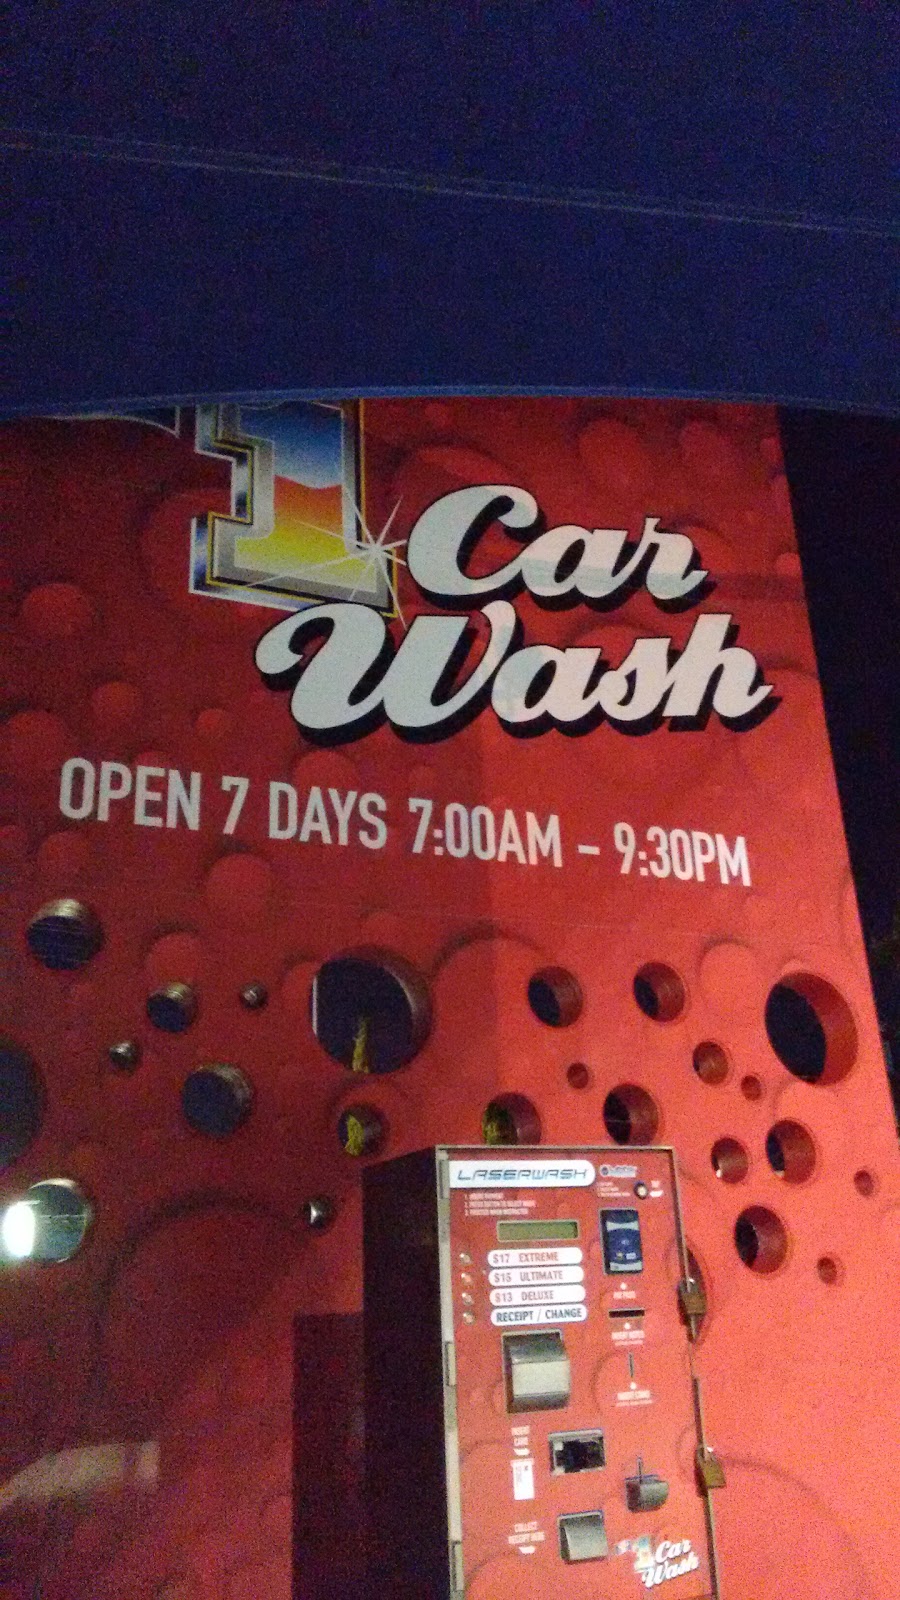 No 1 Car Wash | car wash | 321-325 York St, Sale VIC 3850, Australia | 0419940235 OR +61 419 940 235